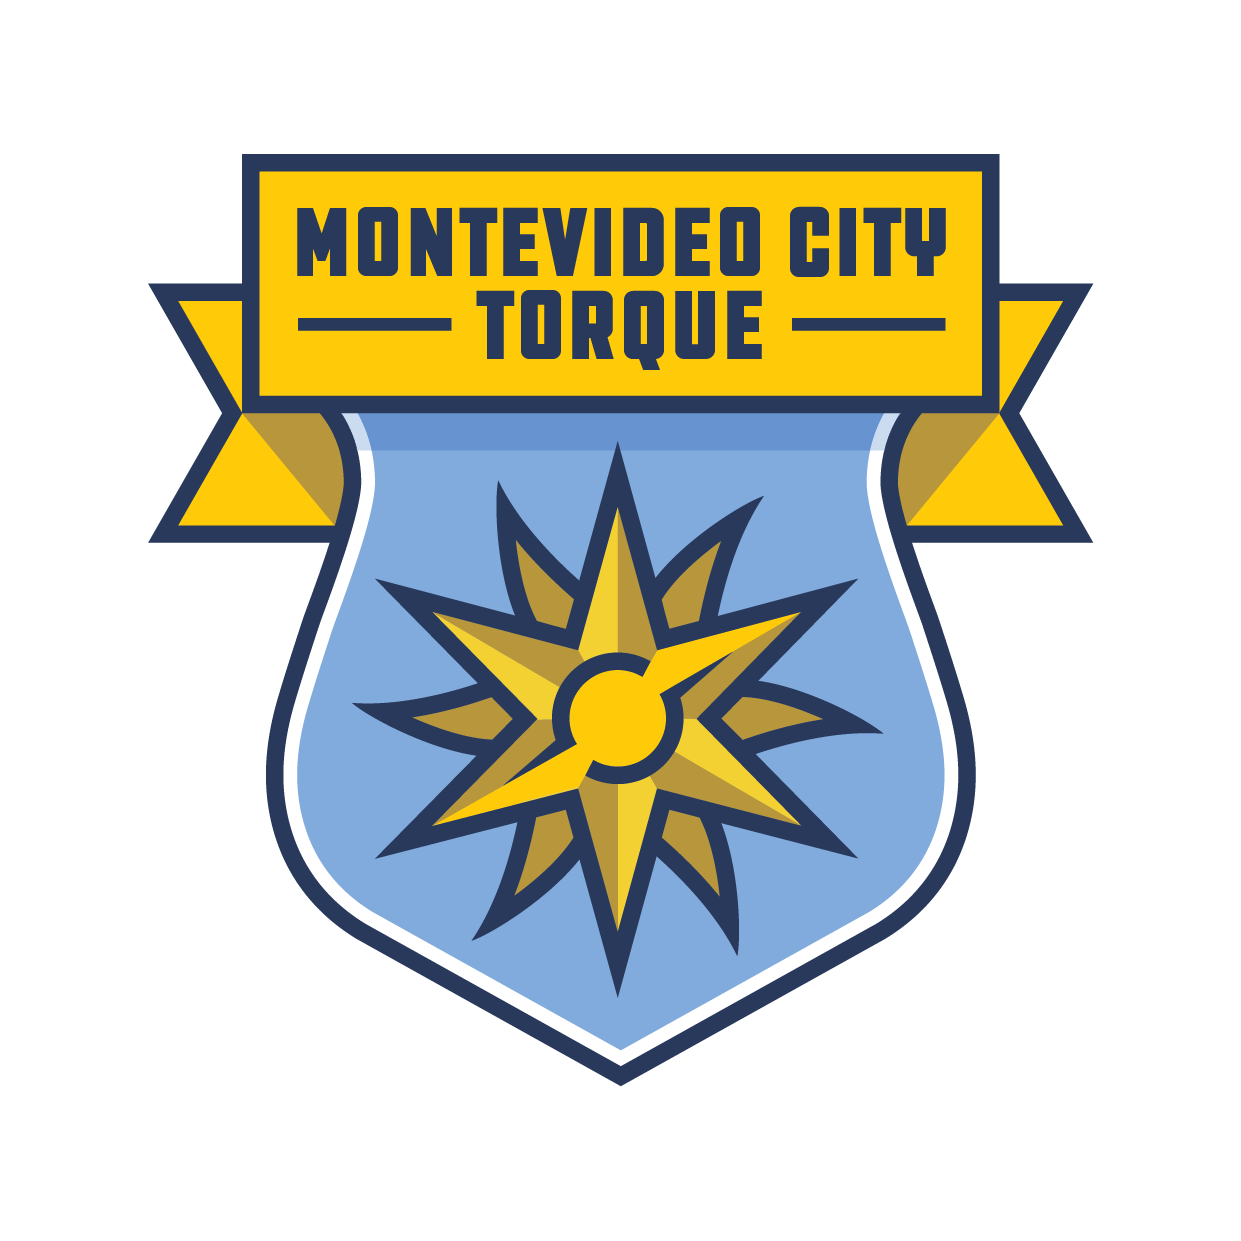 Montevideo City Torque updated - Montevideo City Torque